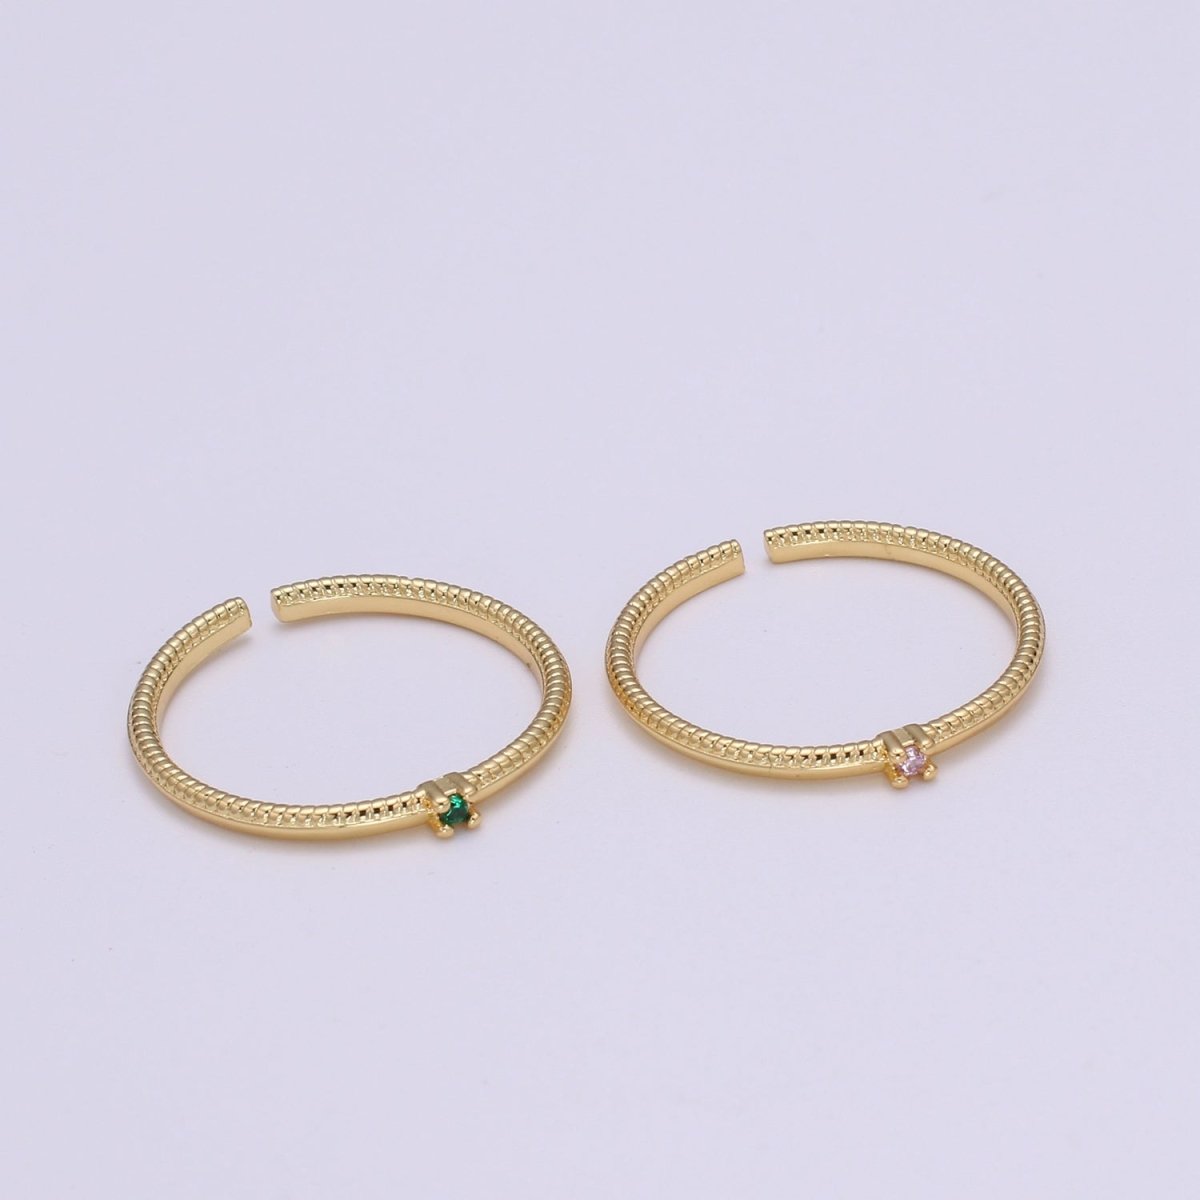 Twisted Band Ring - 24K Gold Minimalist Ring - Stackable Ring - Gold Cz Ring Layering - Stacking Ring Birthstone Jewelry size 6.5 O-281 O-282 - DLUXCA